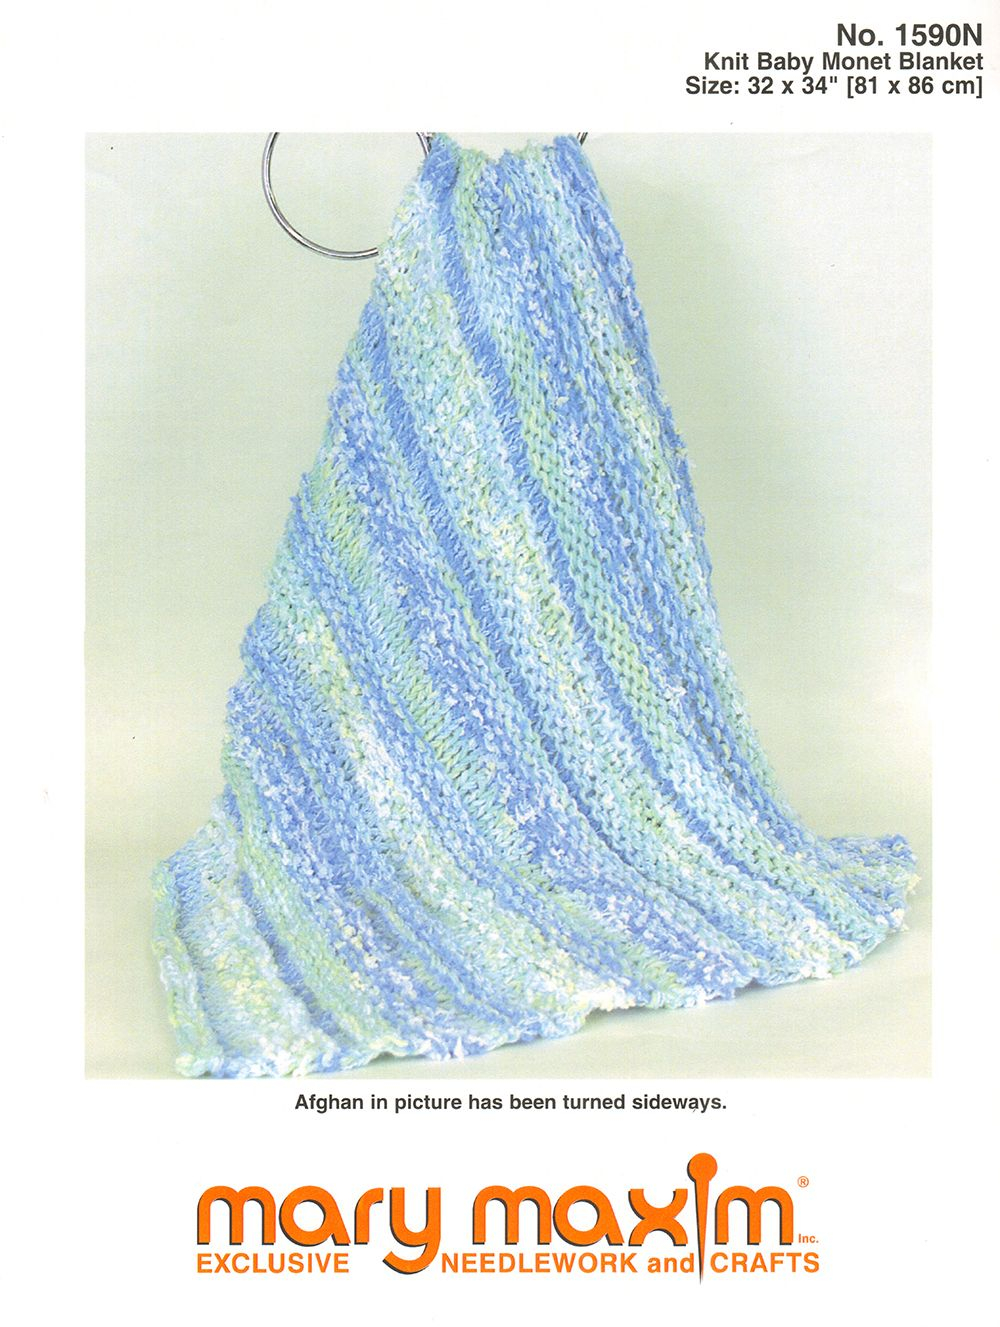 Knitting Baby Blankets Patterns Knit Ba Monet Blanket Pattern